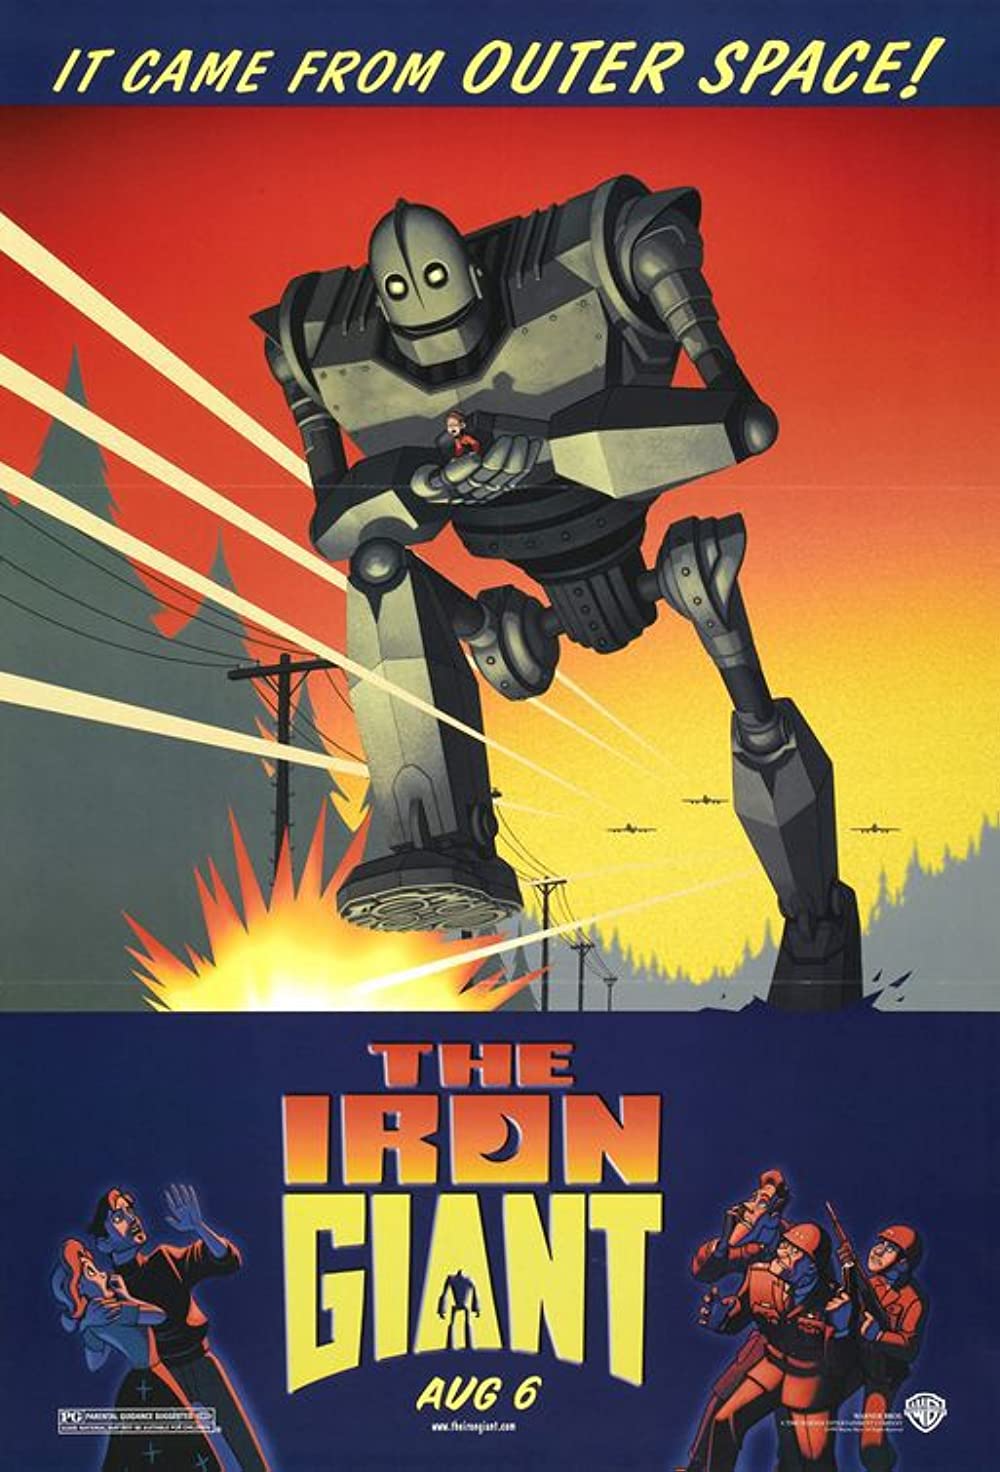 Filmbeschreibung zu The Iron Giant